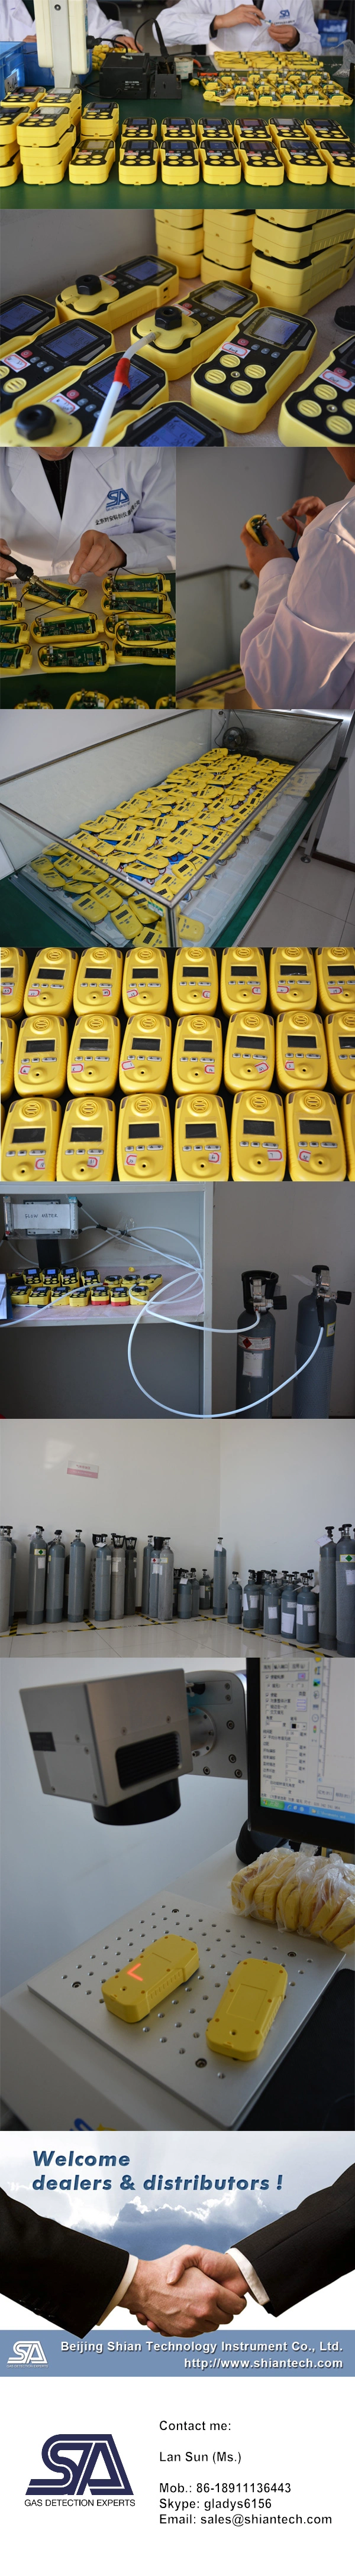 Factory Price Multi Gas Detector IP66 4 Gas Detector with External Gas Sampling Pump